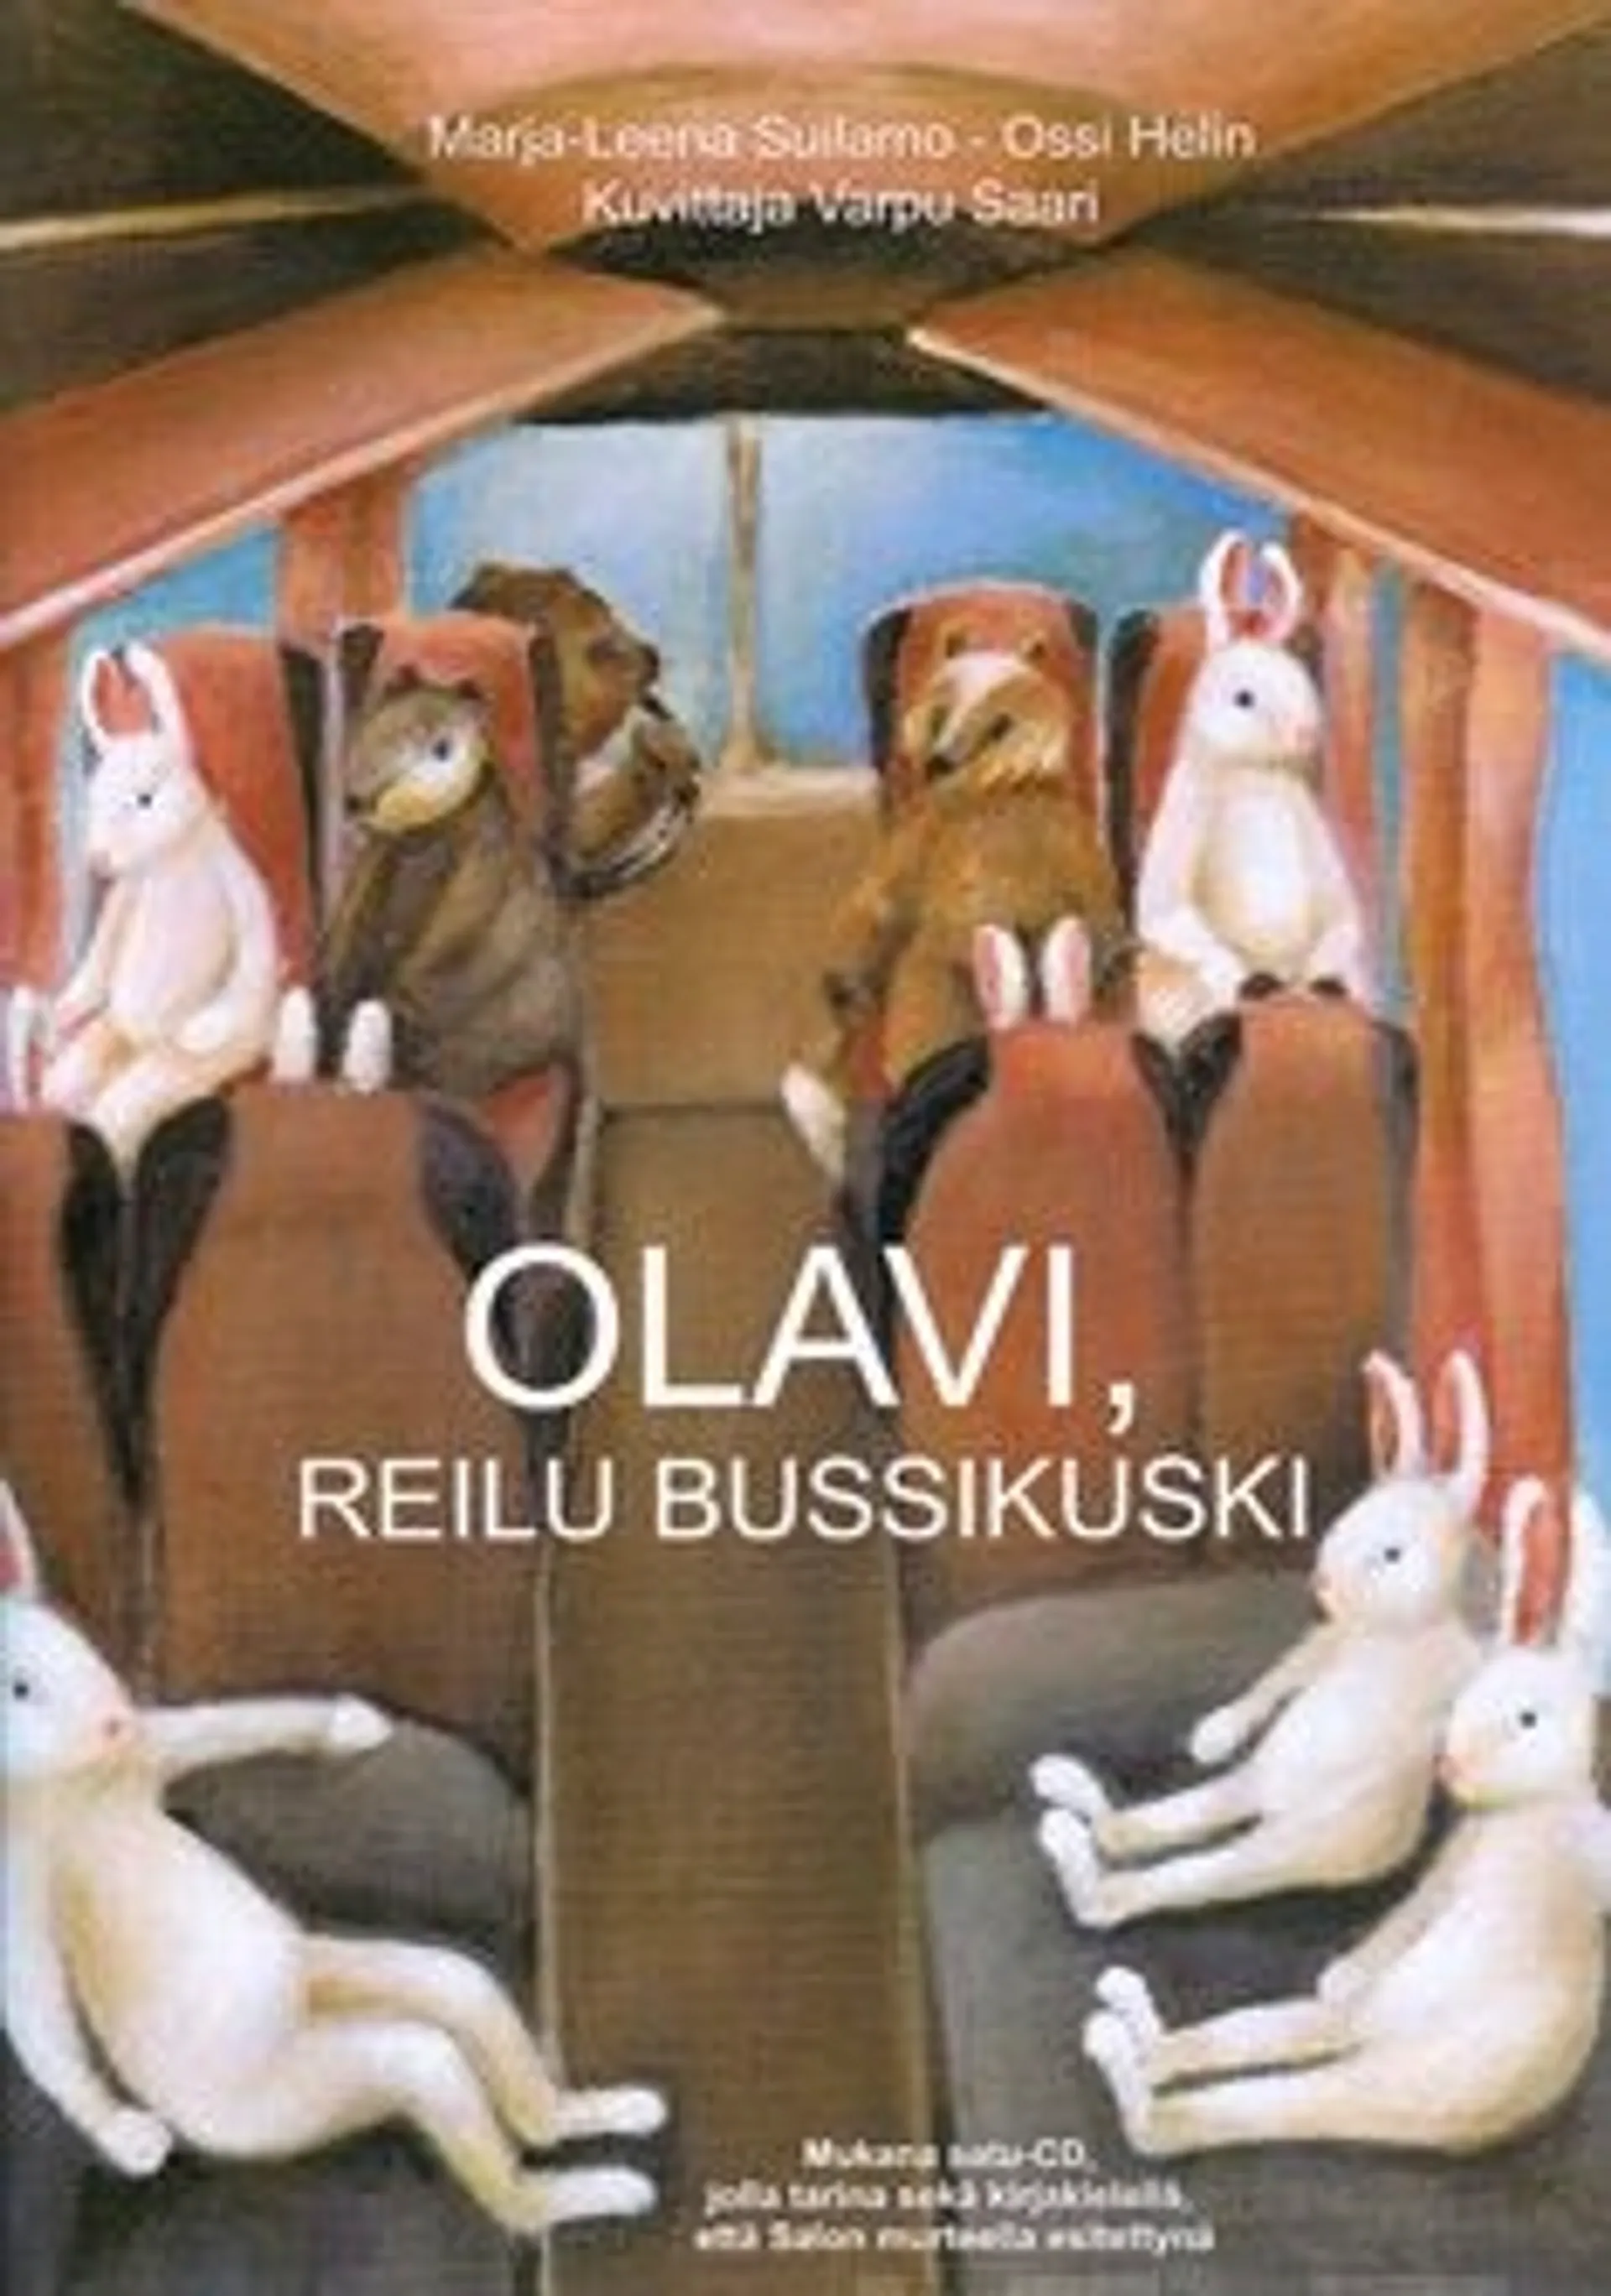 Suilamo, Olavi, reilu bussikuski (+cd)